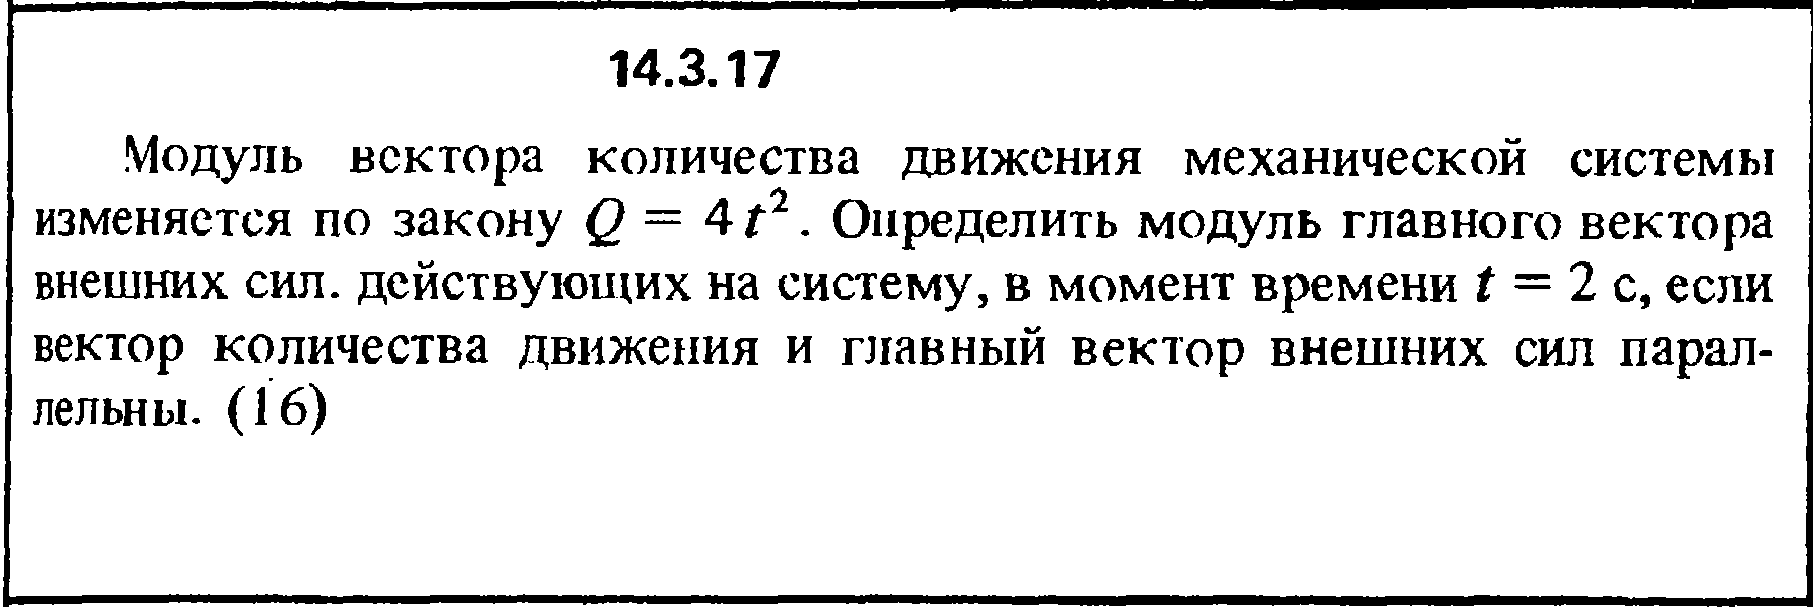 Решение задачи 14.3.17 из сборника Кепе О.Е. 1989 года